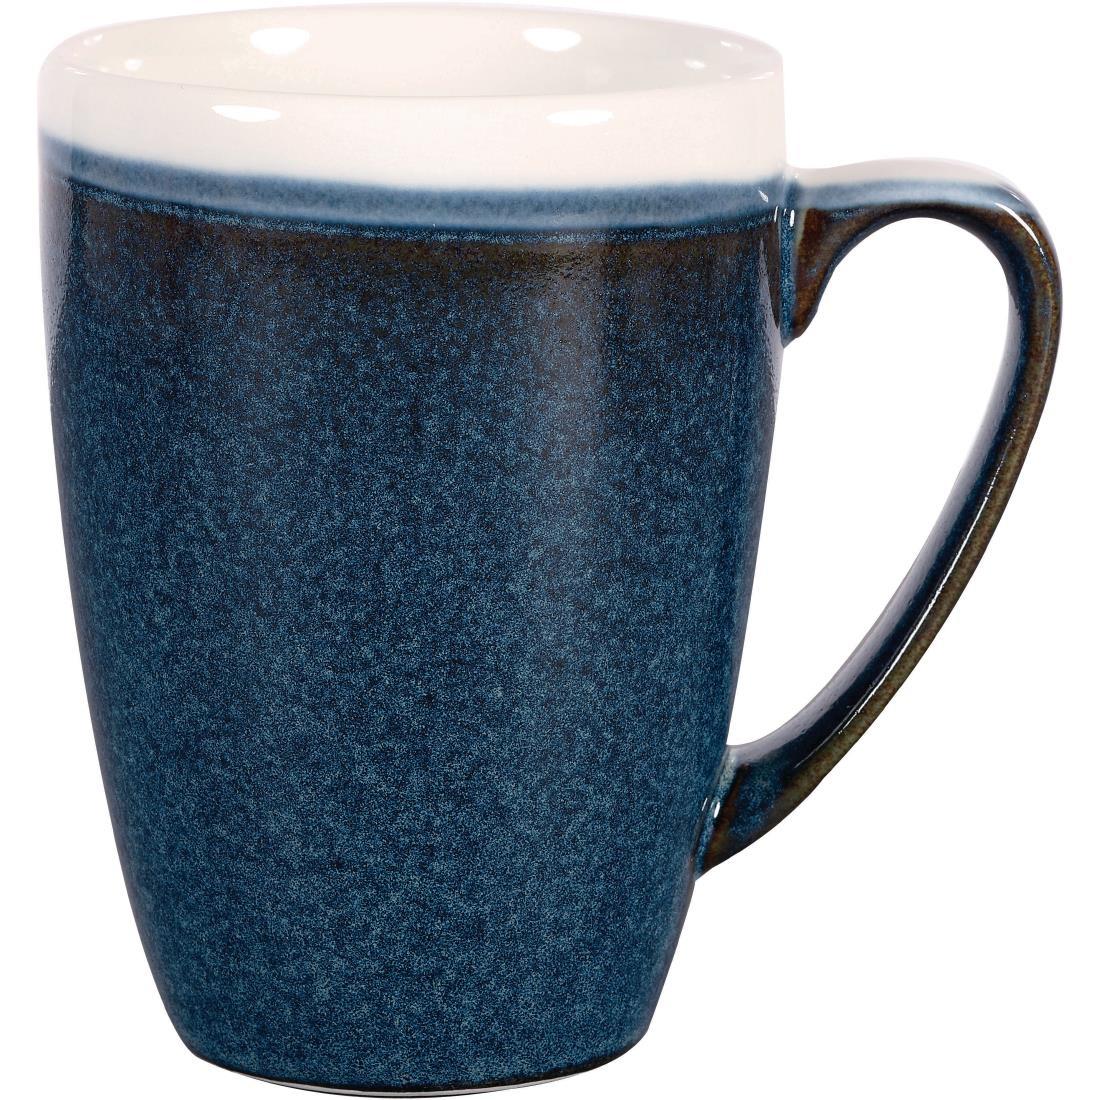 Churchill Monochrome Profile Mug Sapphire Blue 340ml (Pack of 12) - DR673  - 1